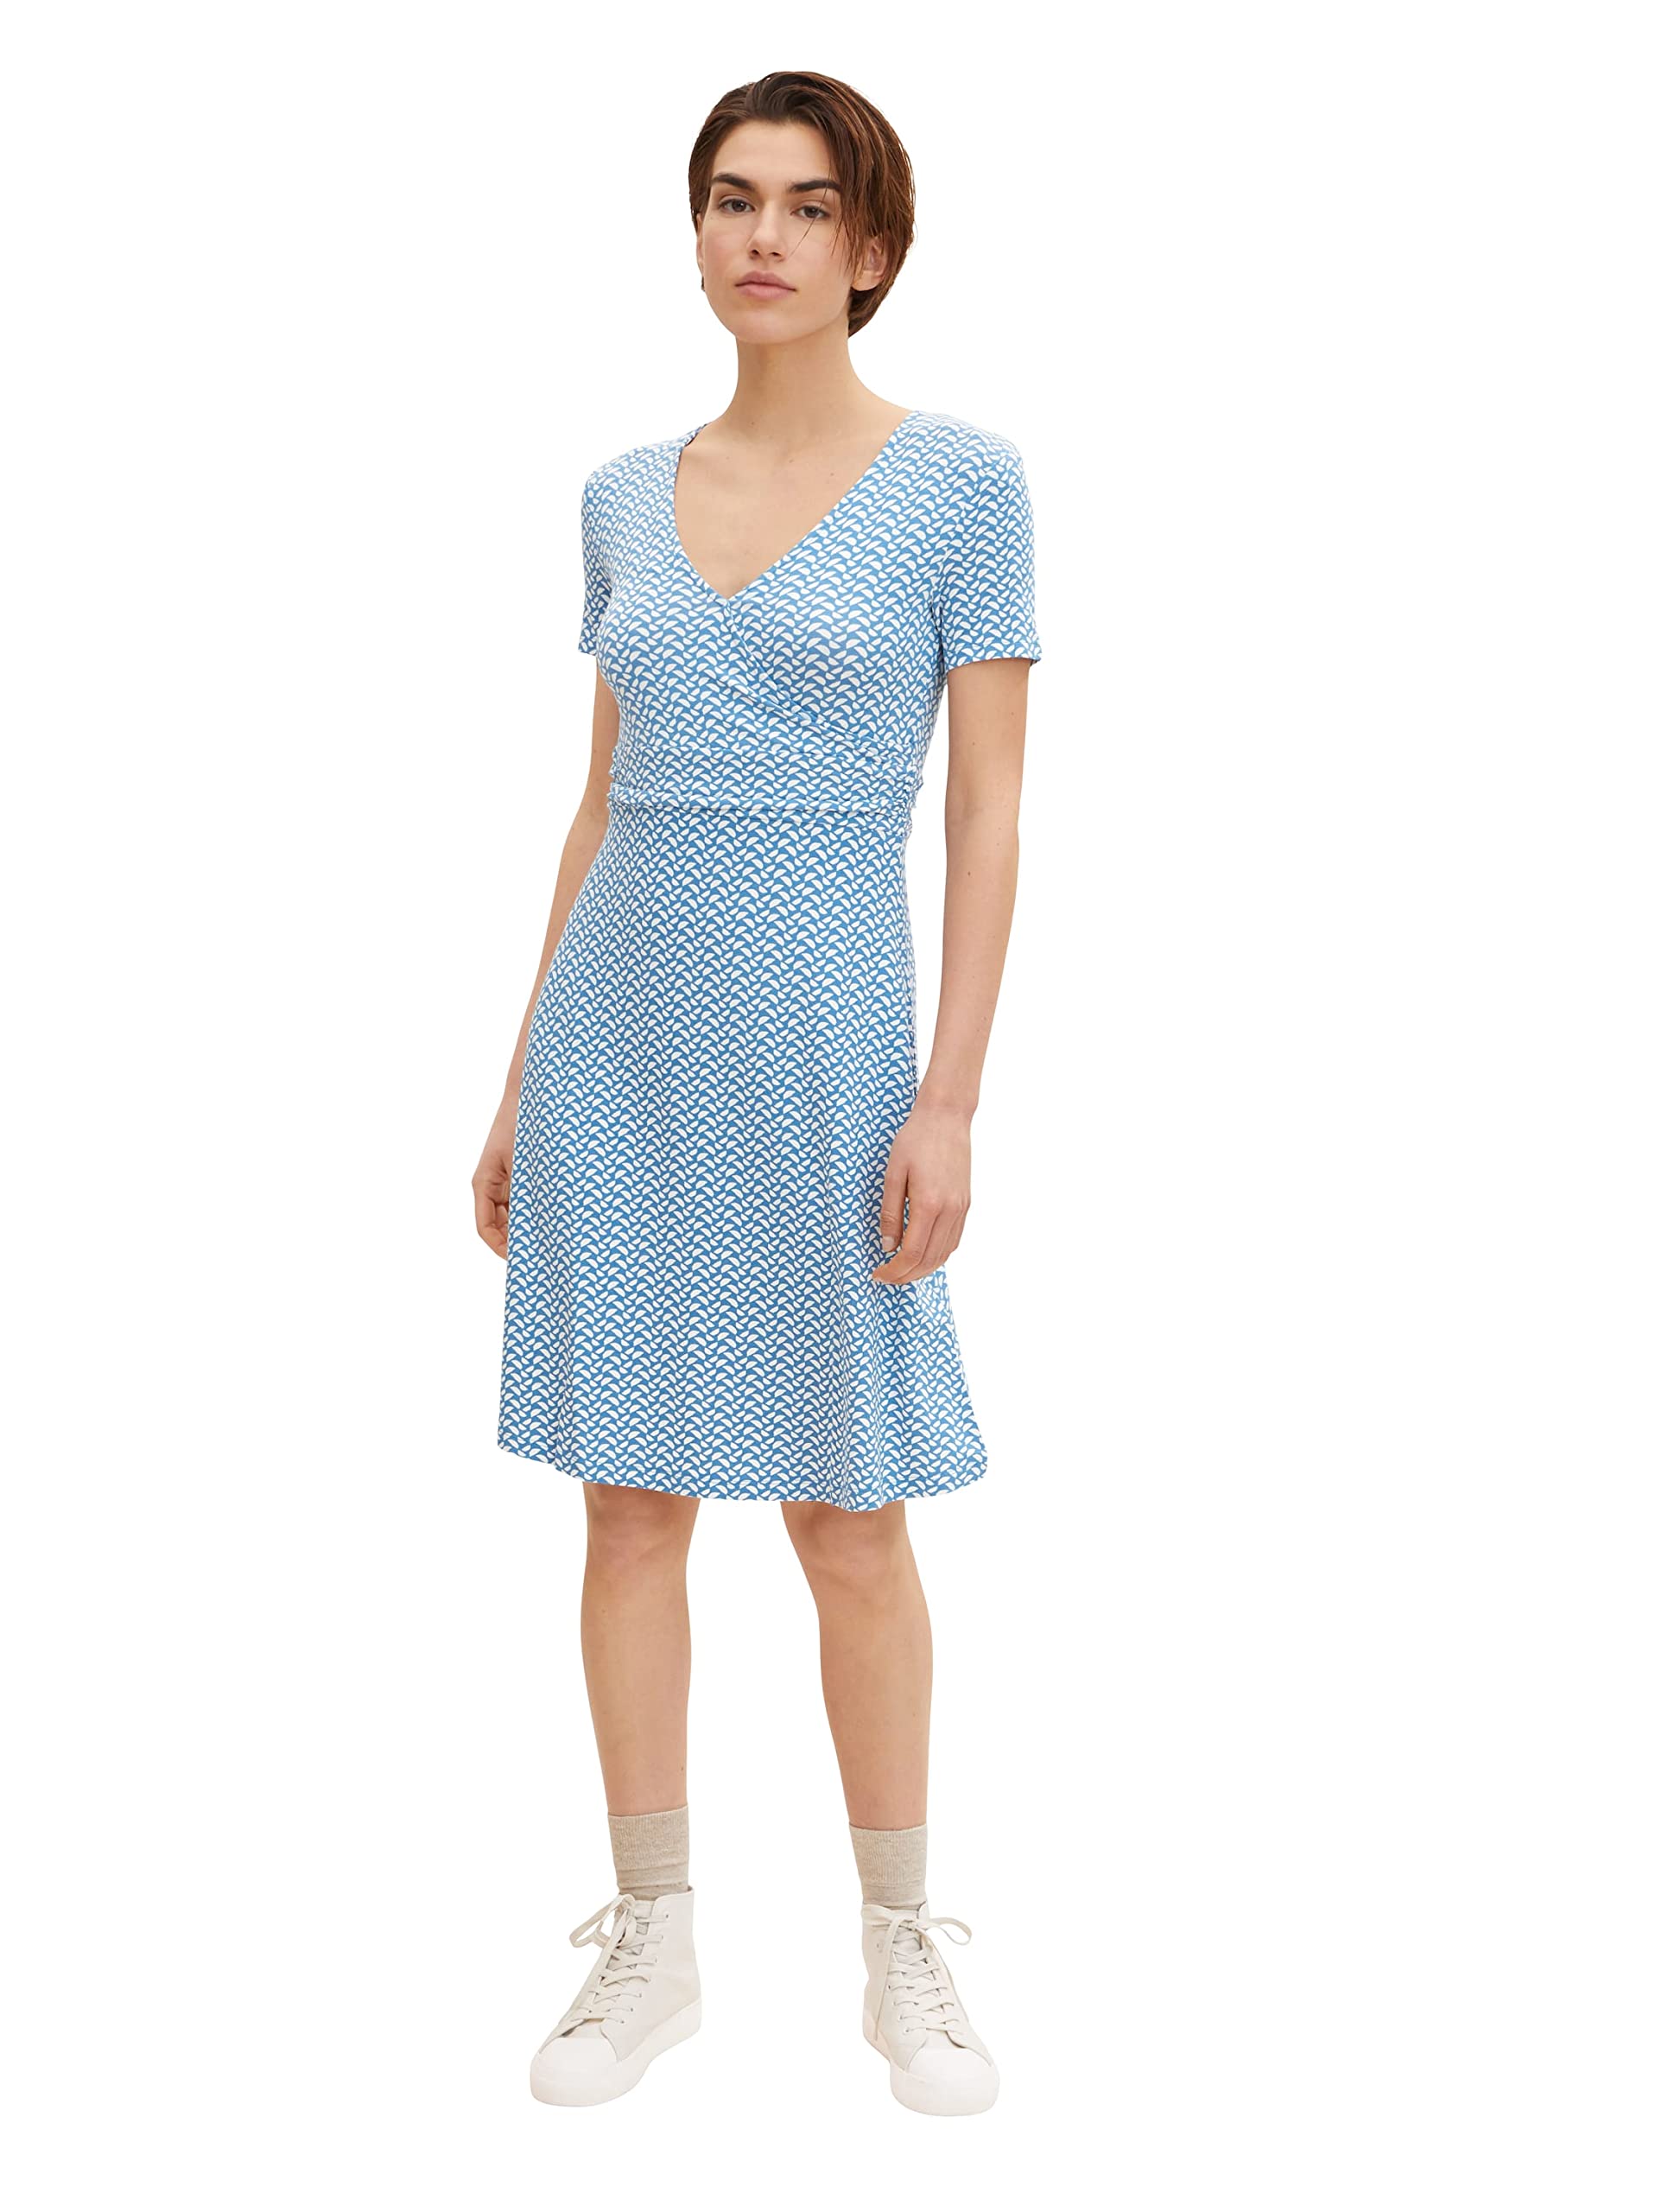 TOM TAILOR Damen Kleid in Wickeloptik 1032059, 29526 - Blue Minimal Design, 46